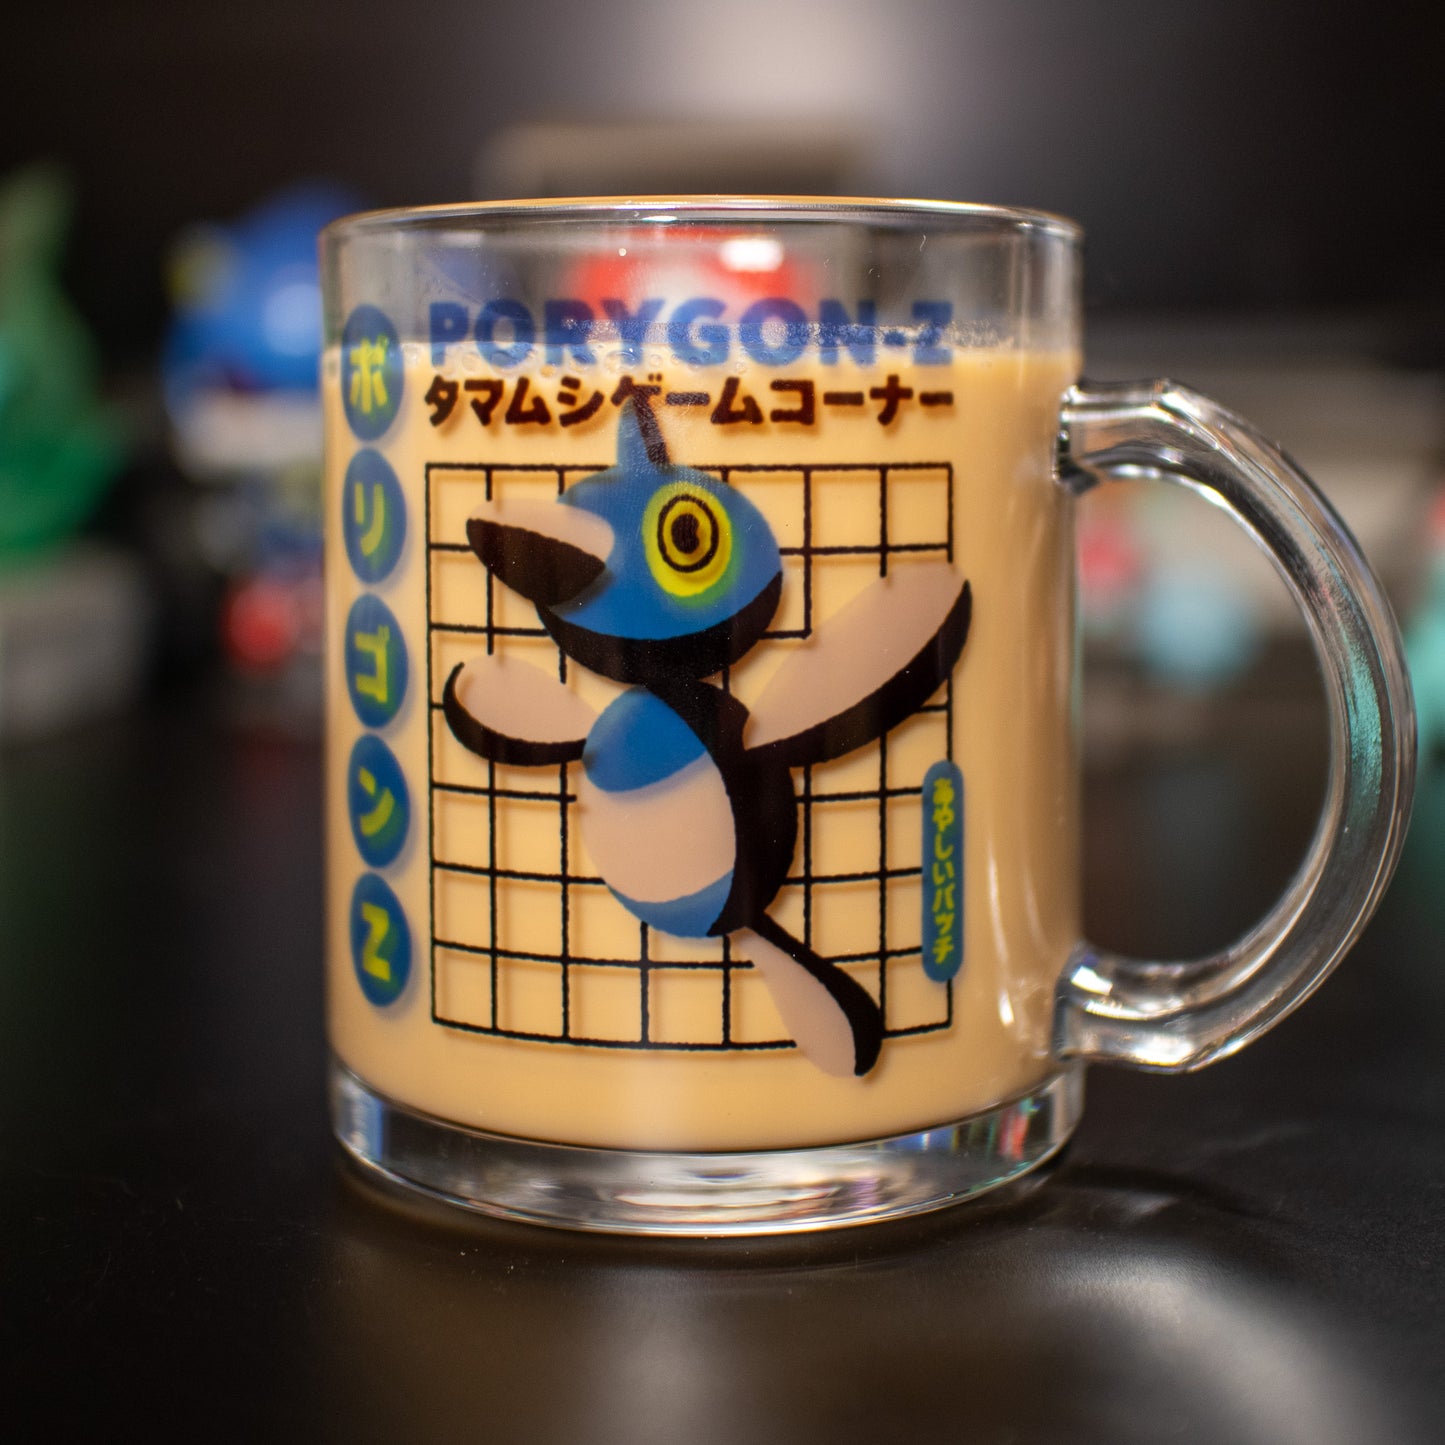 Porygon-z Japanese Advertisement Mug